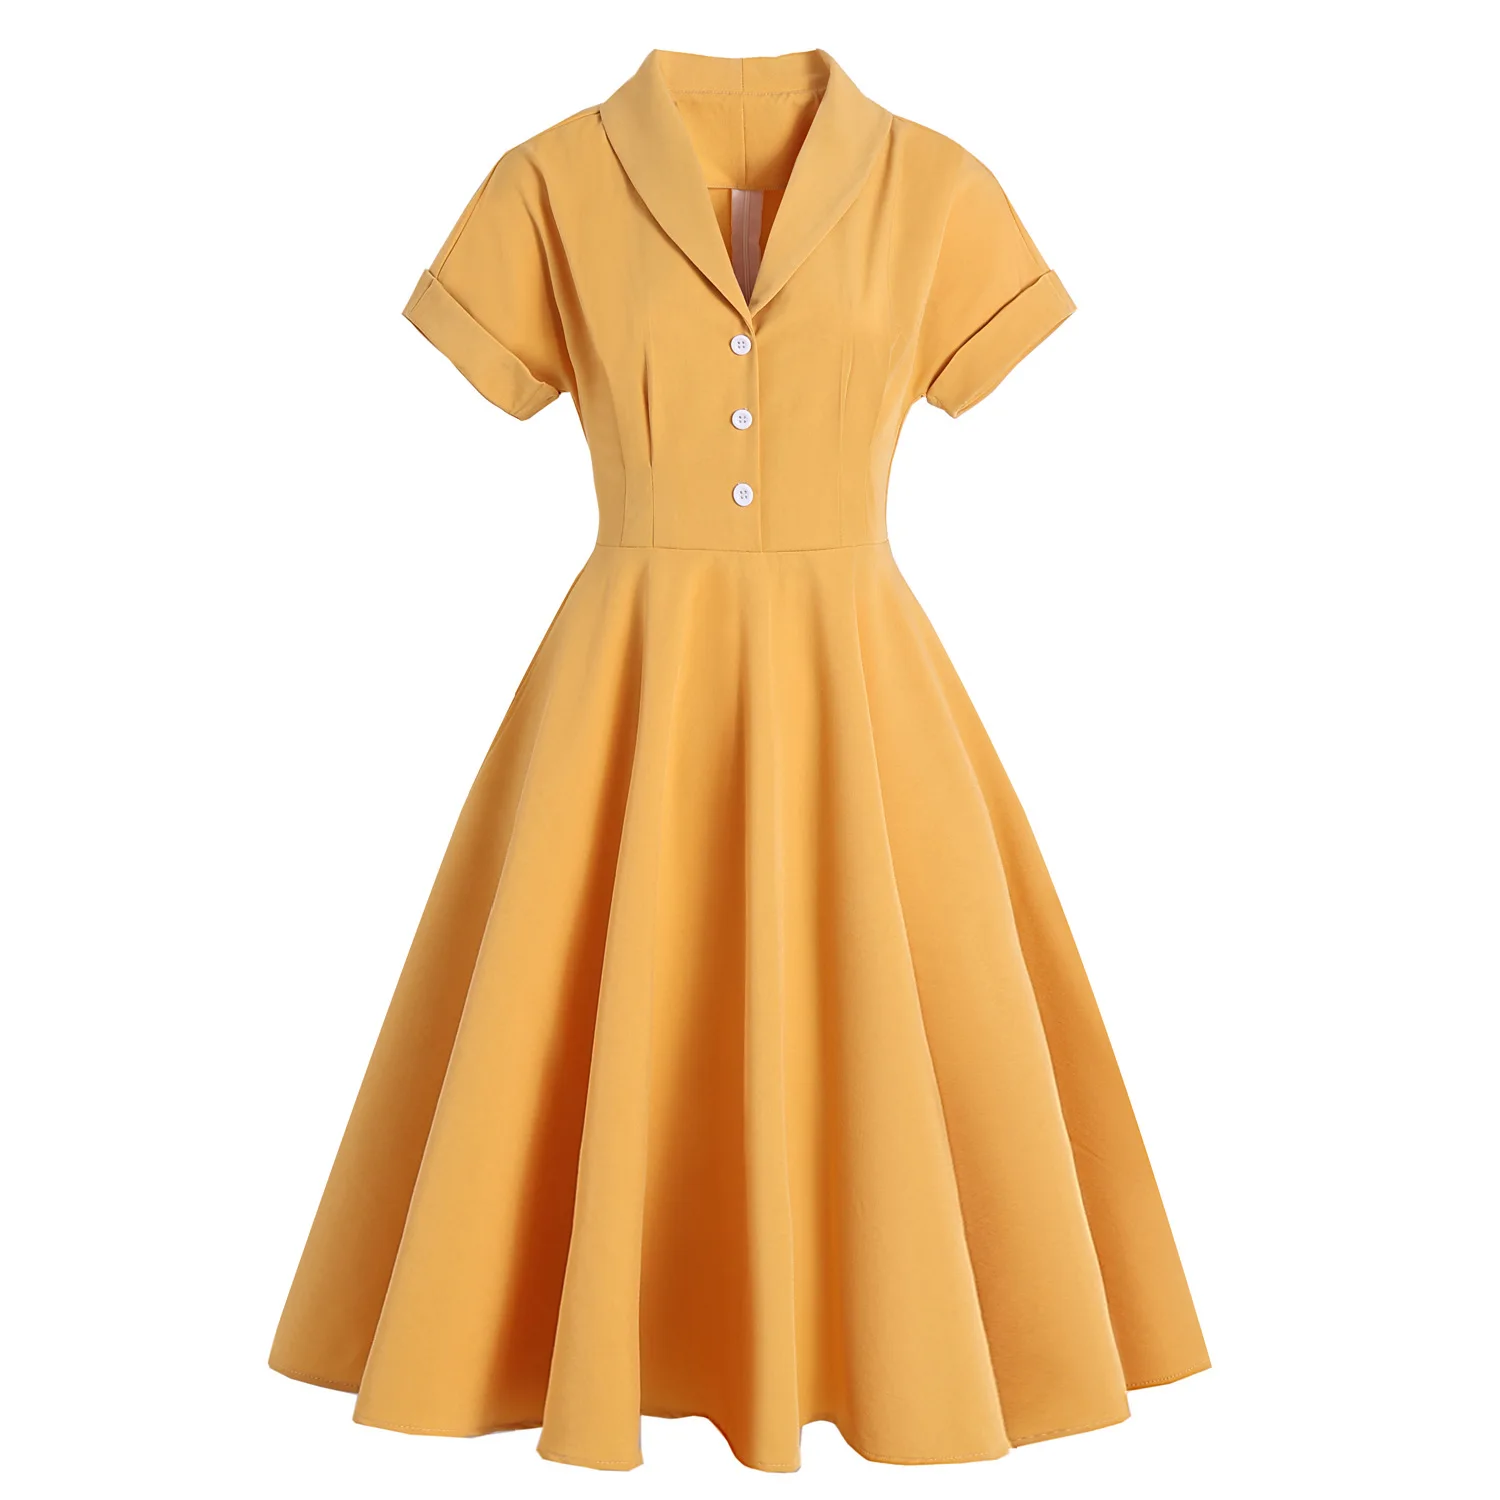 

Vintage Dress 1950s 60s Retro Shirt Dress Plus Size Floral Cotton Women Ladies Solid Swing Rockabilly Dresses Vestidos, Yellow